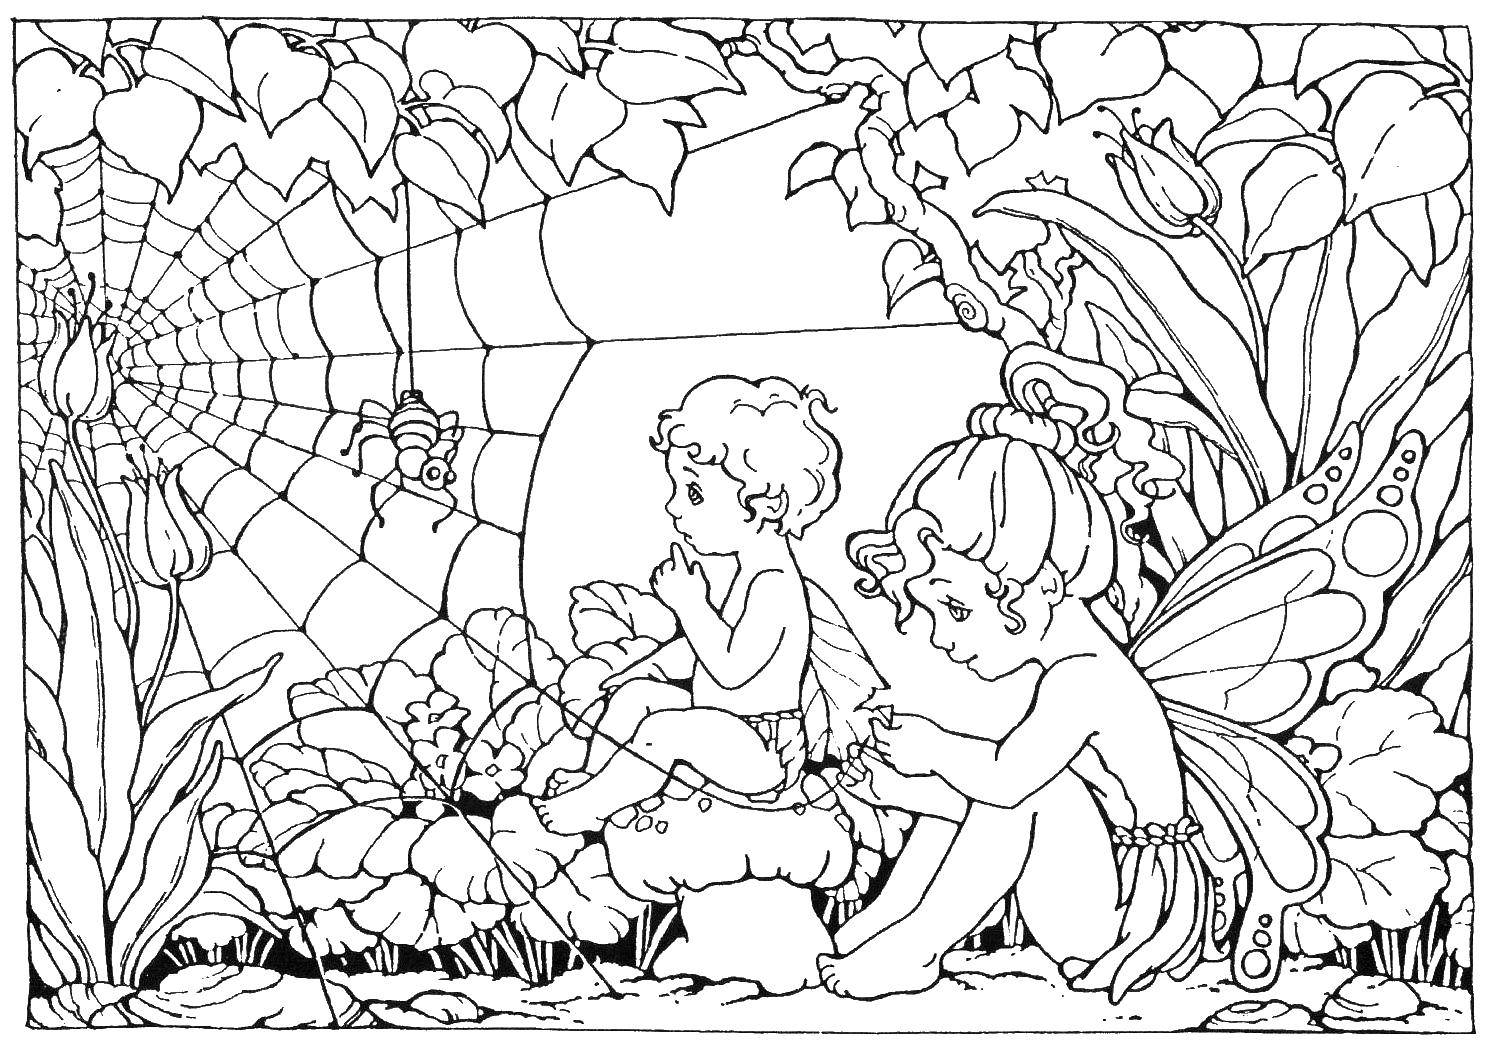 Coloring Fairies gather cobwebs. Category fairies. Tags:  fairies, web.